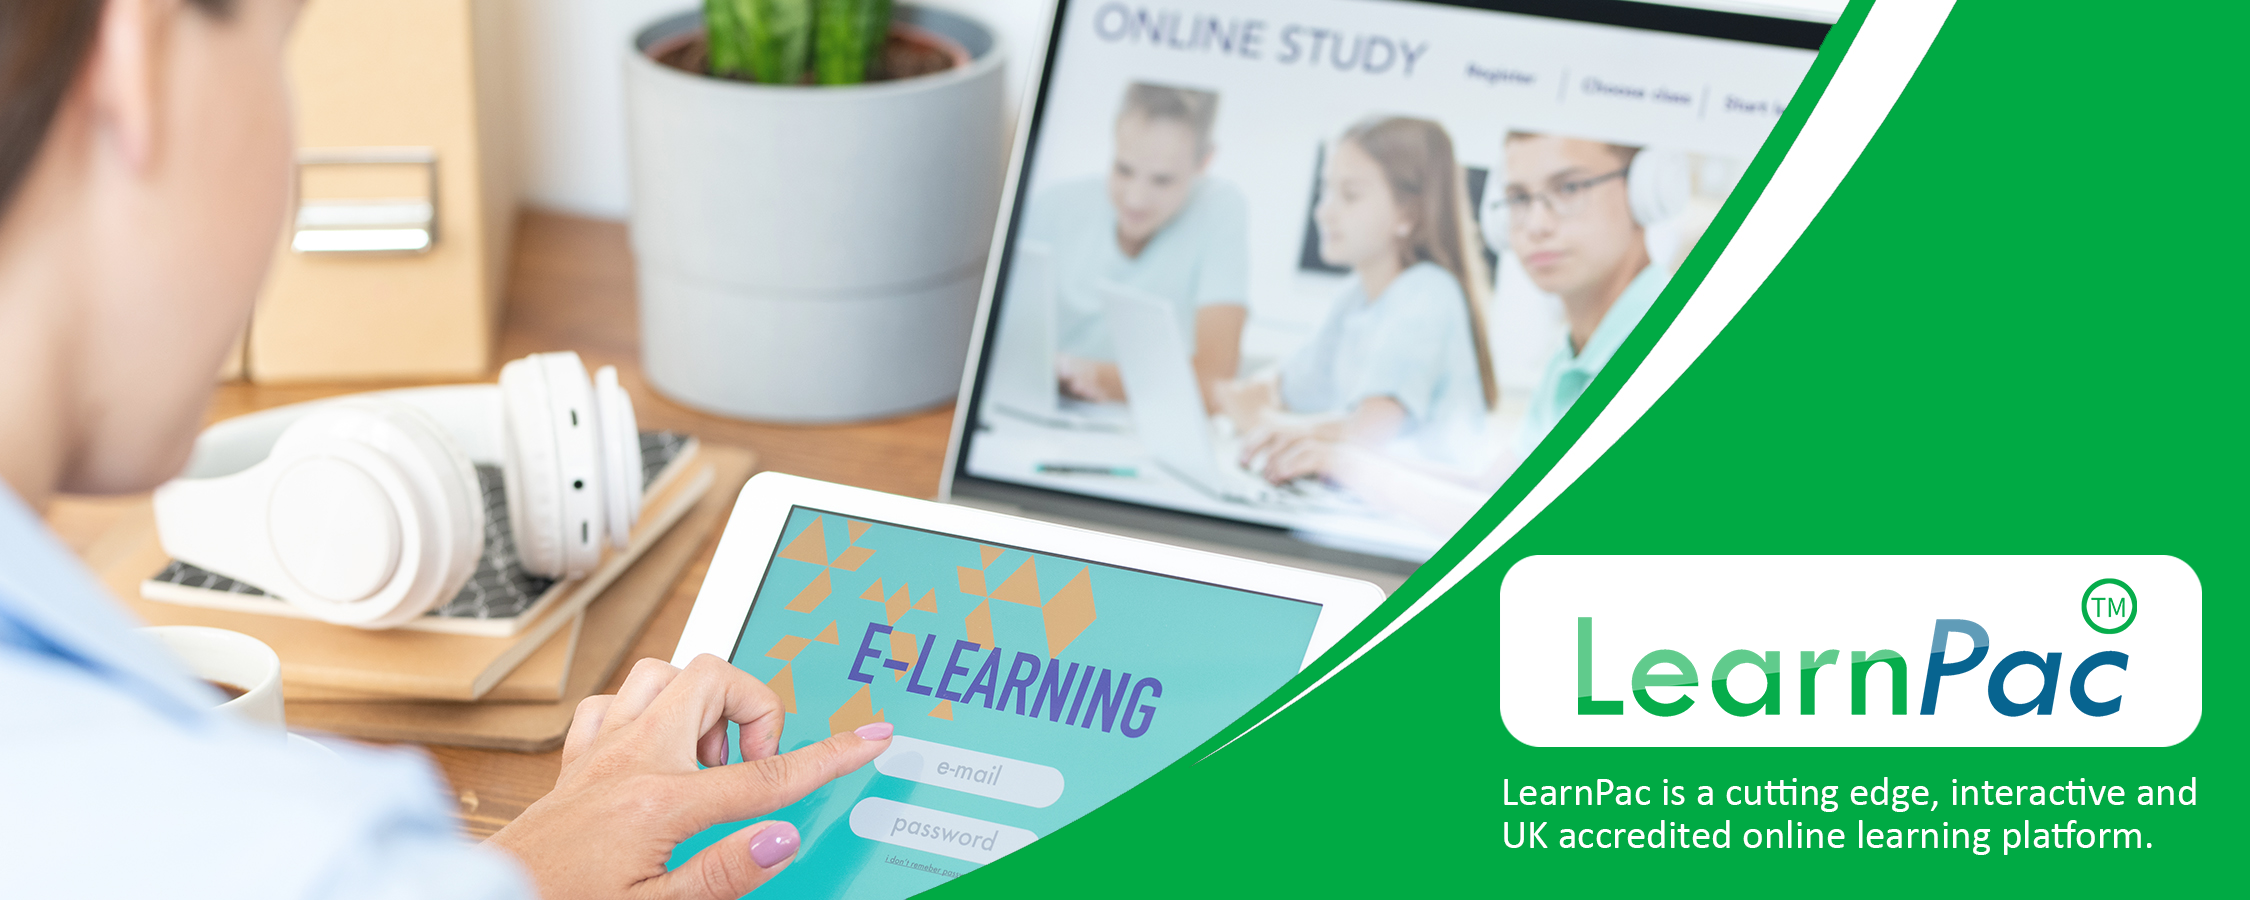 Care Certificate Standard 12 - Online Learning Courses - E-Learning Courses - LearnPac Systems UK -